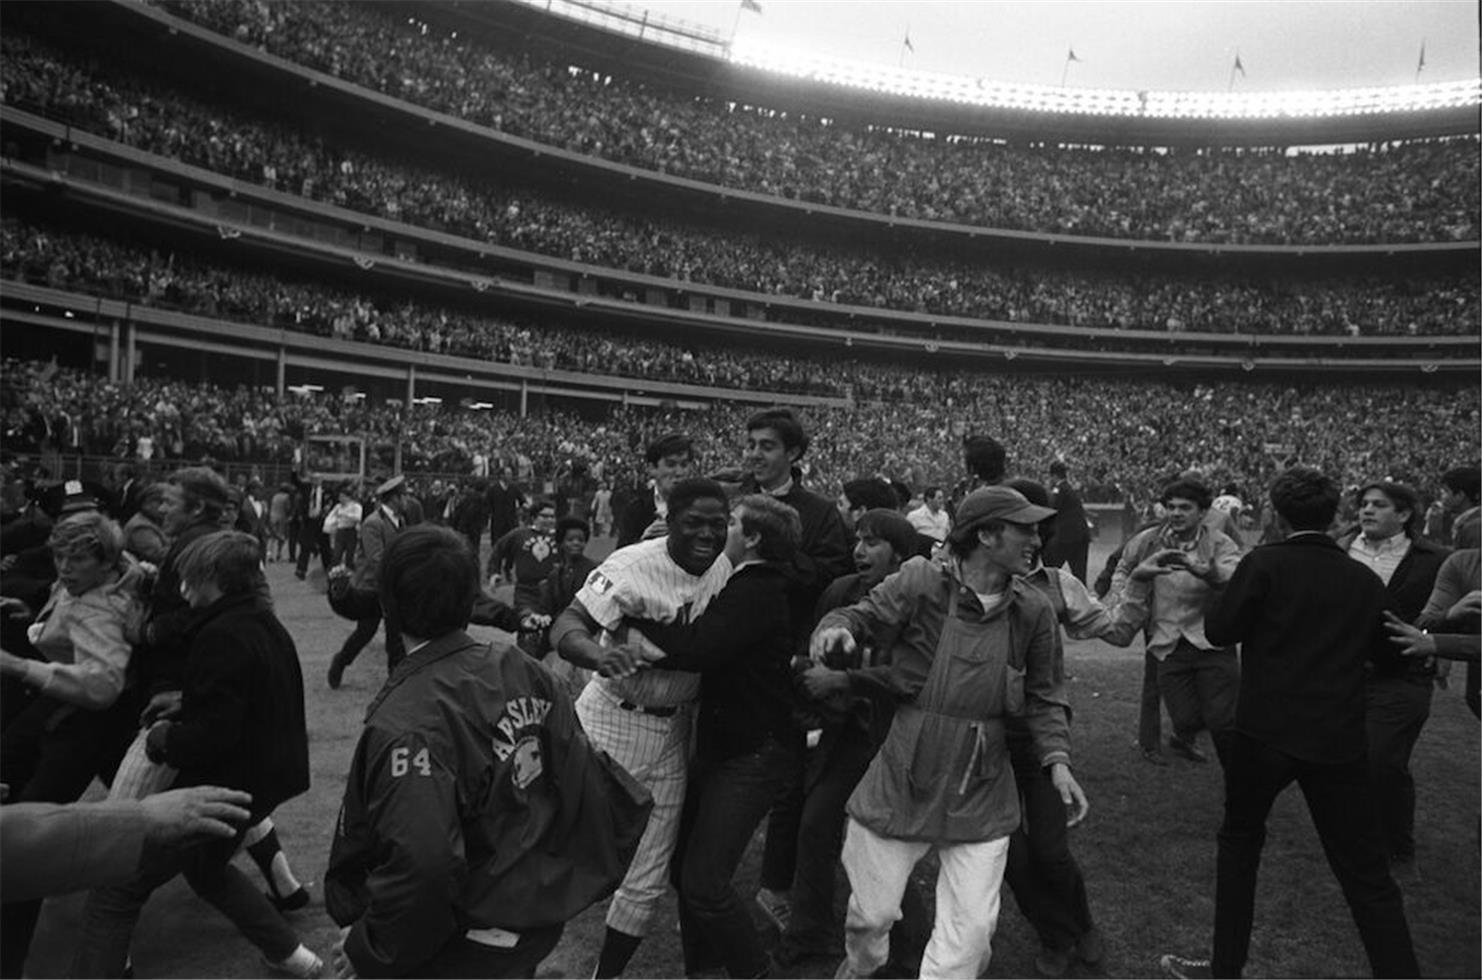 Ken Regan Portrait Photograph - New York Mets vs. Baltimore Orioles, World Series Game 5, 1969